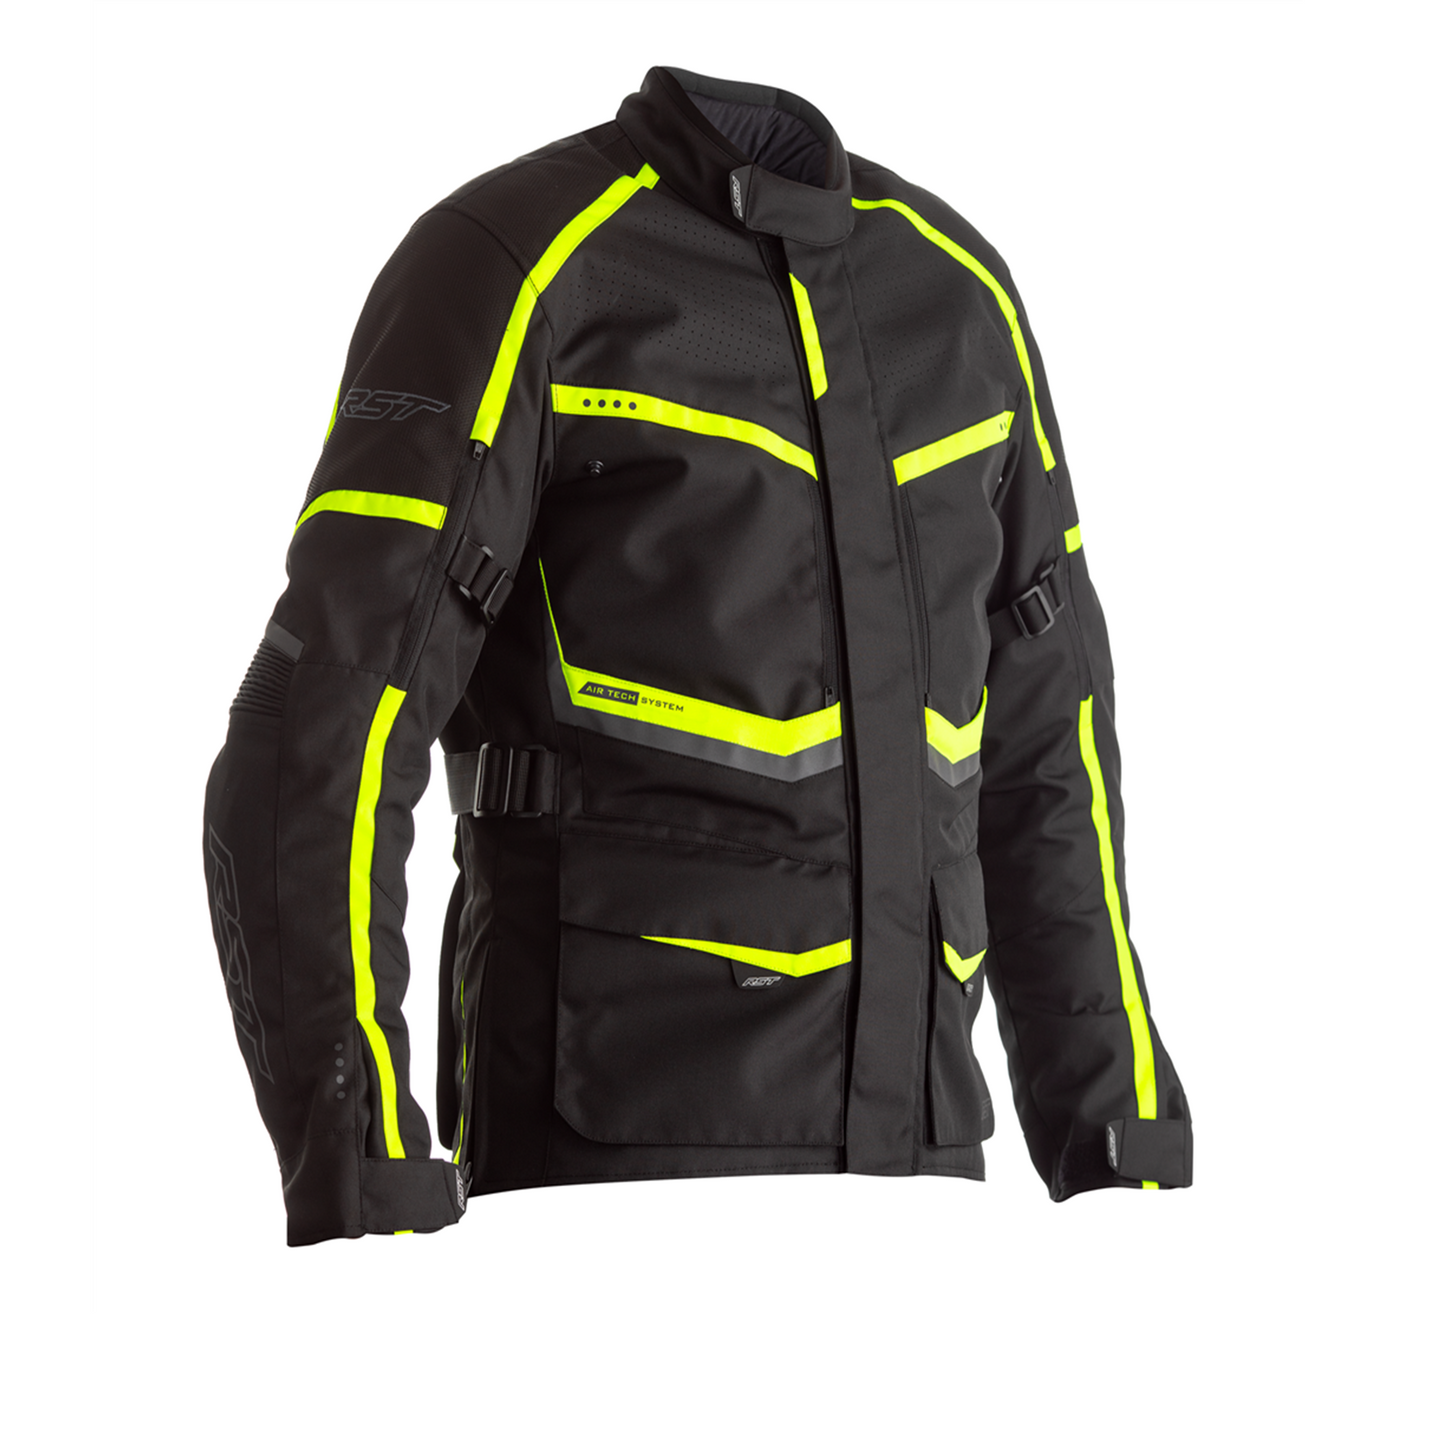 RST Maverick CE Ladies Textile Jacket - Black / Neon (2492)